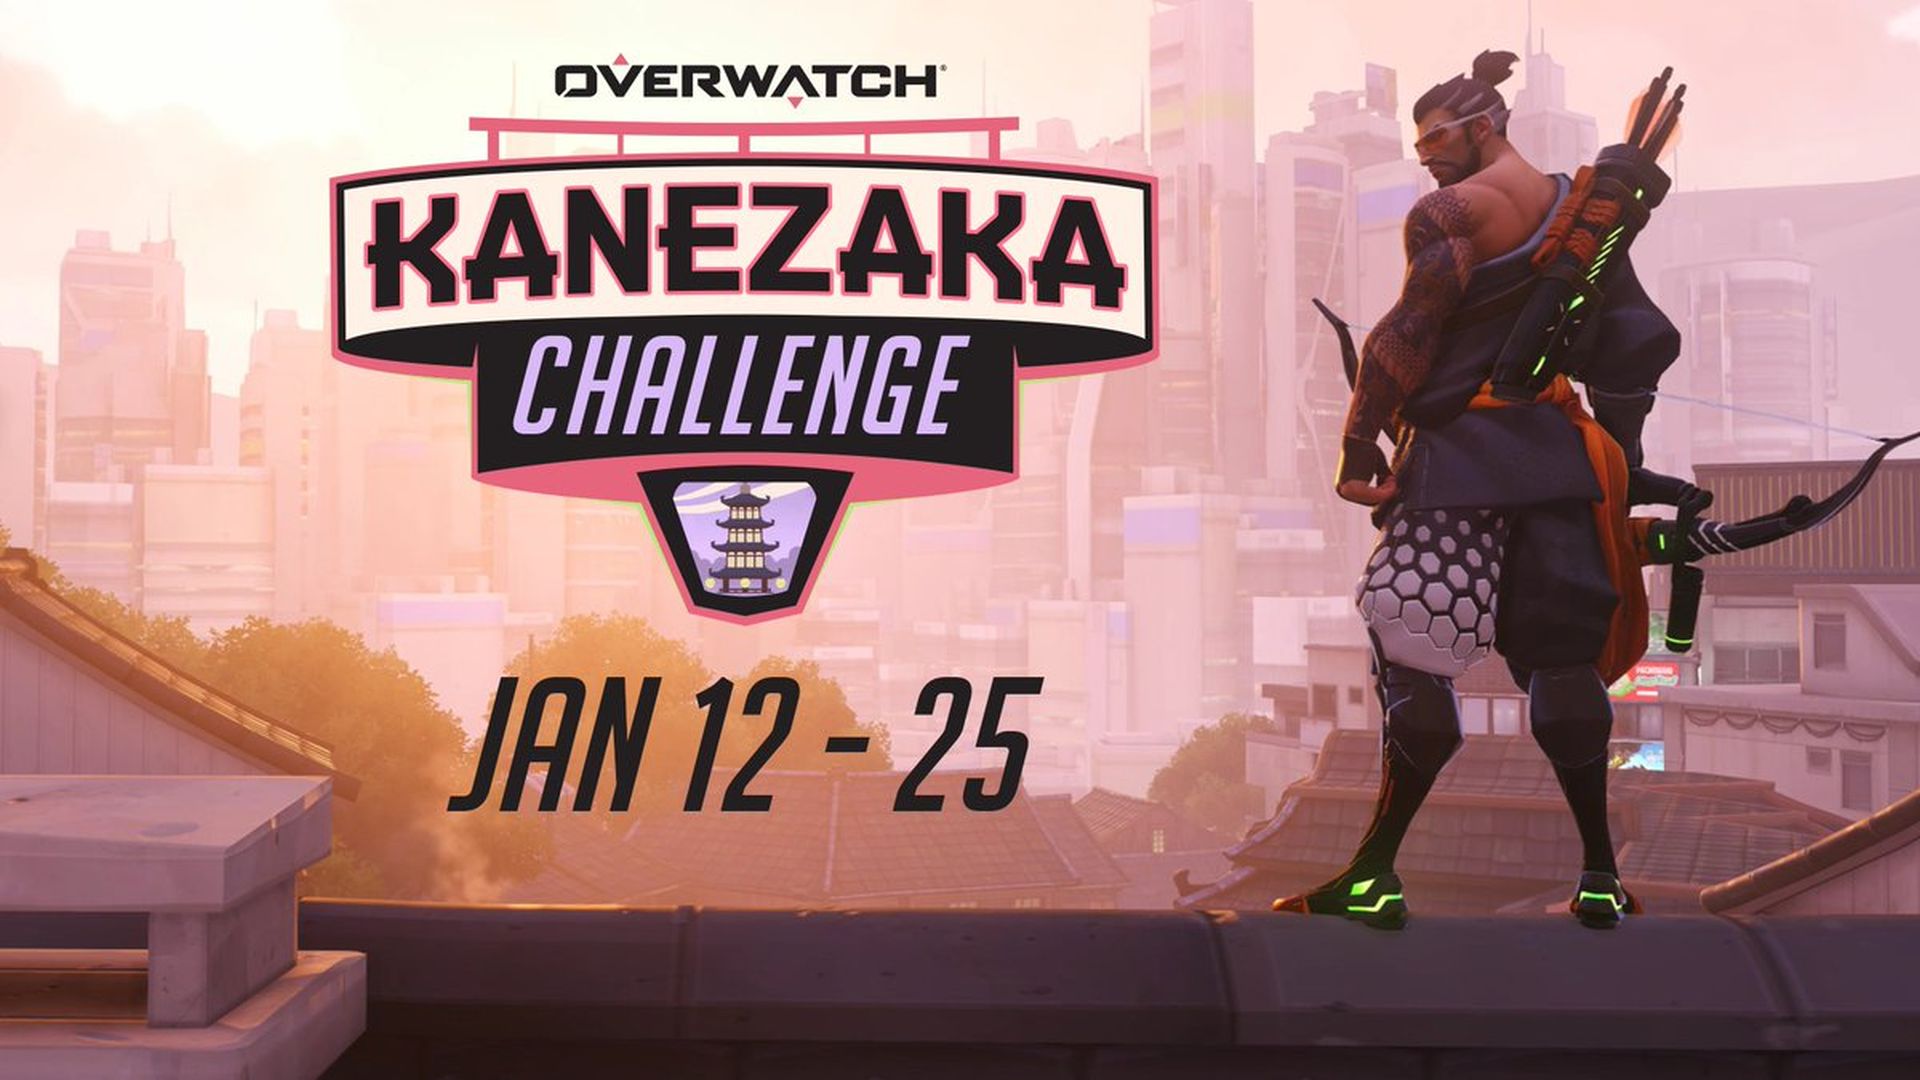 Desafio Overwatch Kanezaka